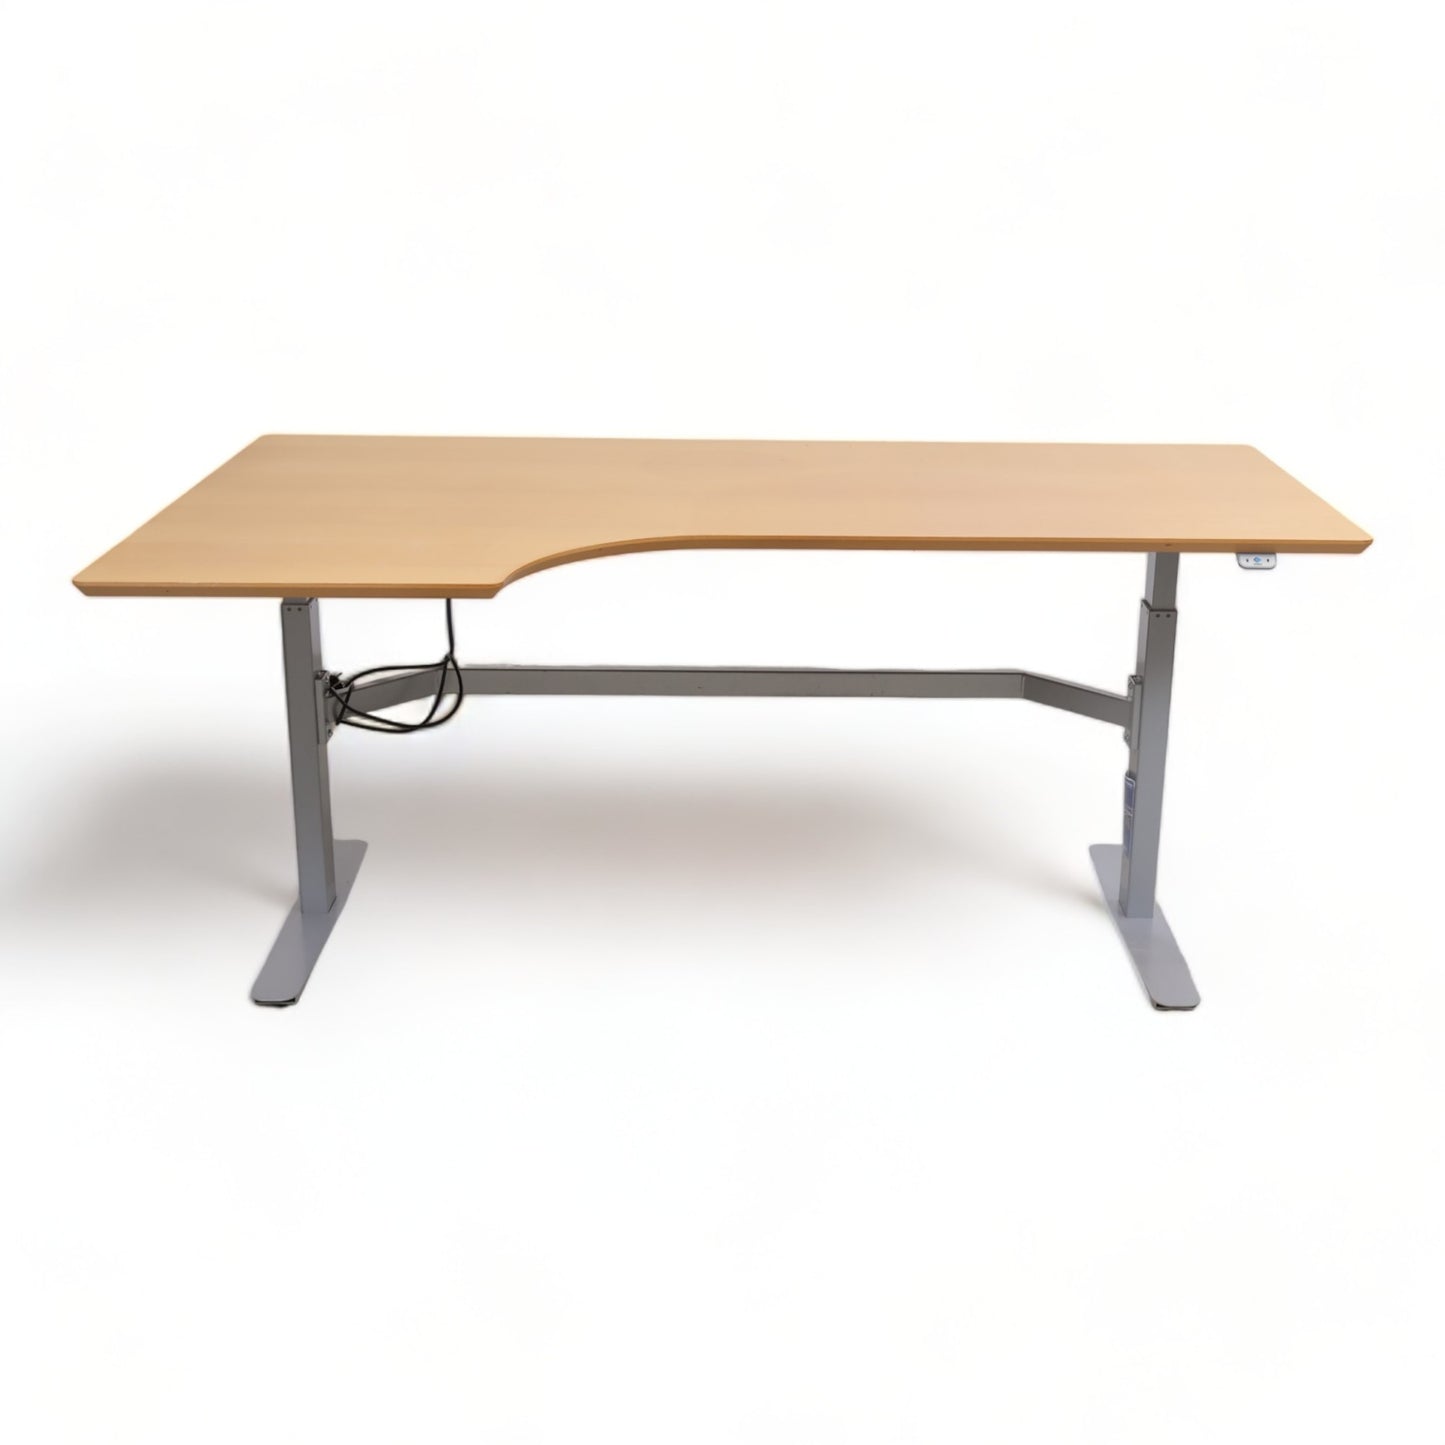 Kvalitetssikret |190x110 cm, Edsbyn elektrisk hev/senk skrivebord